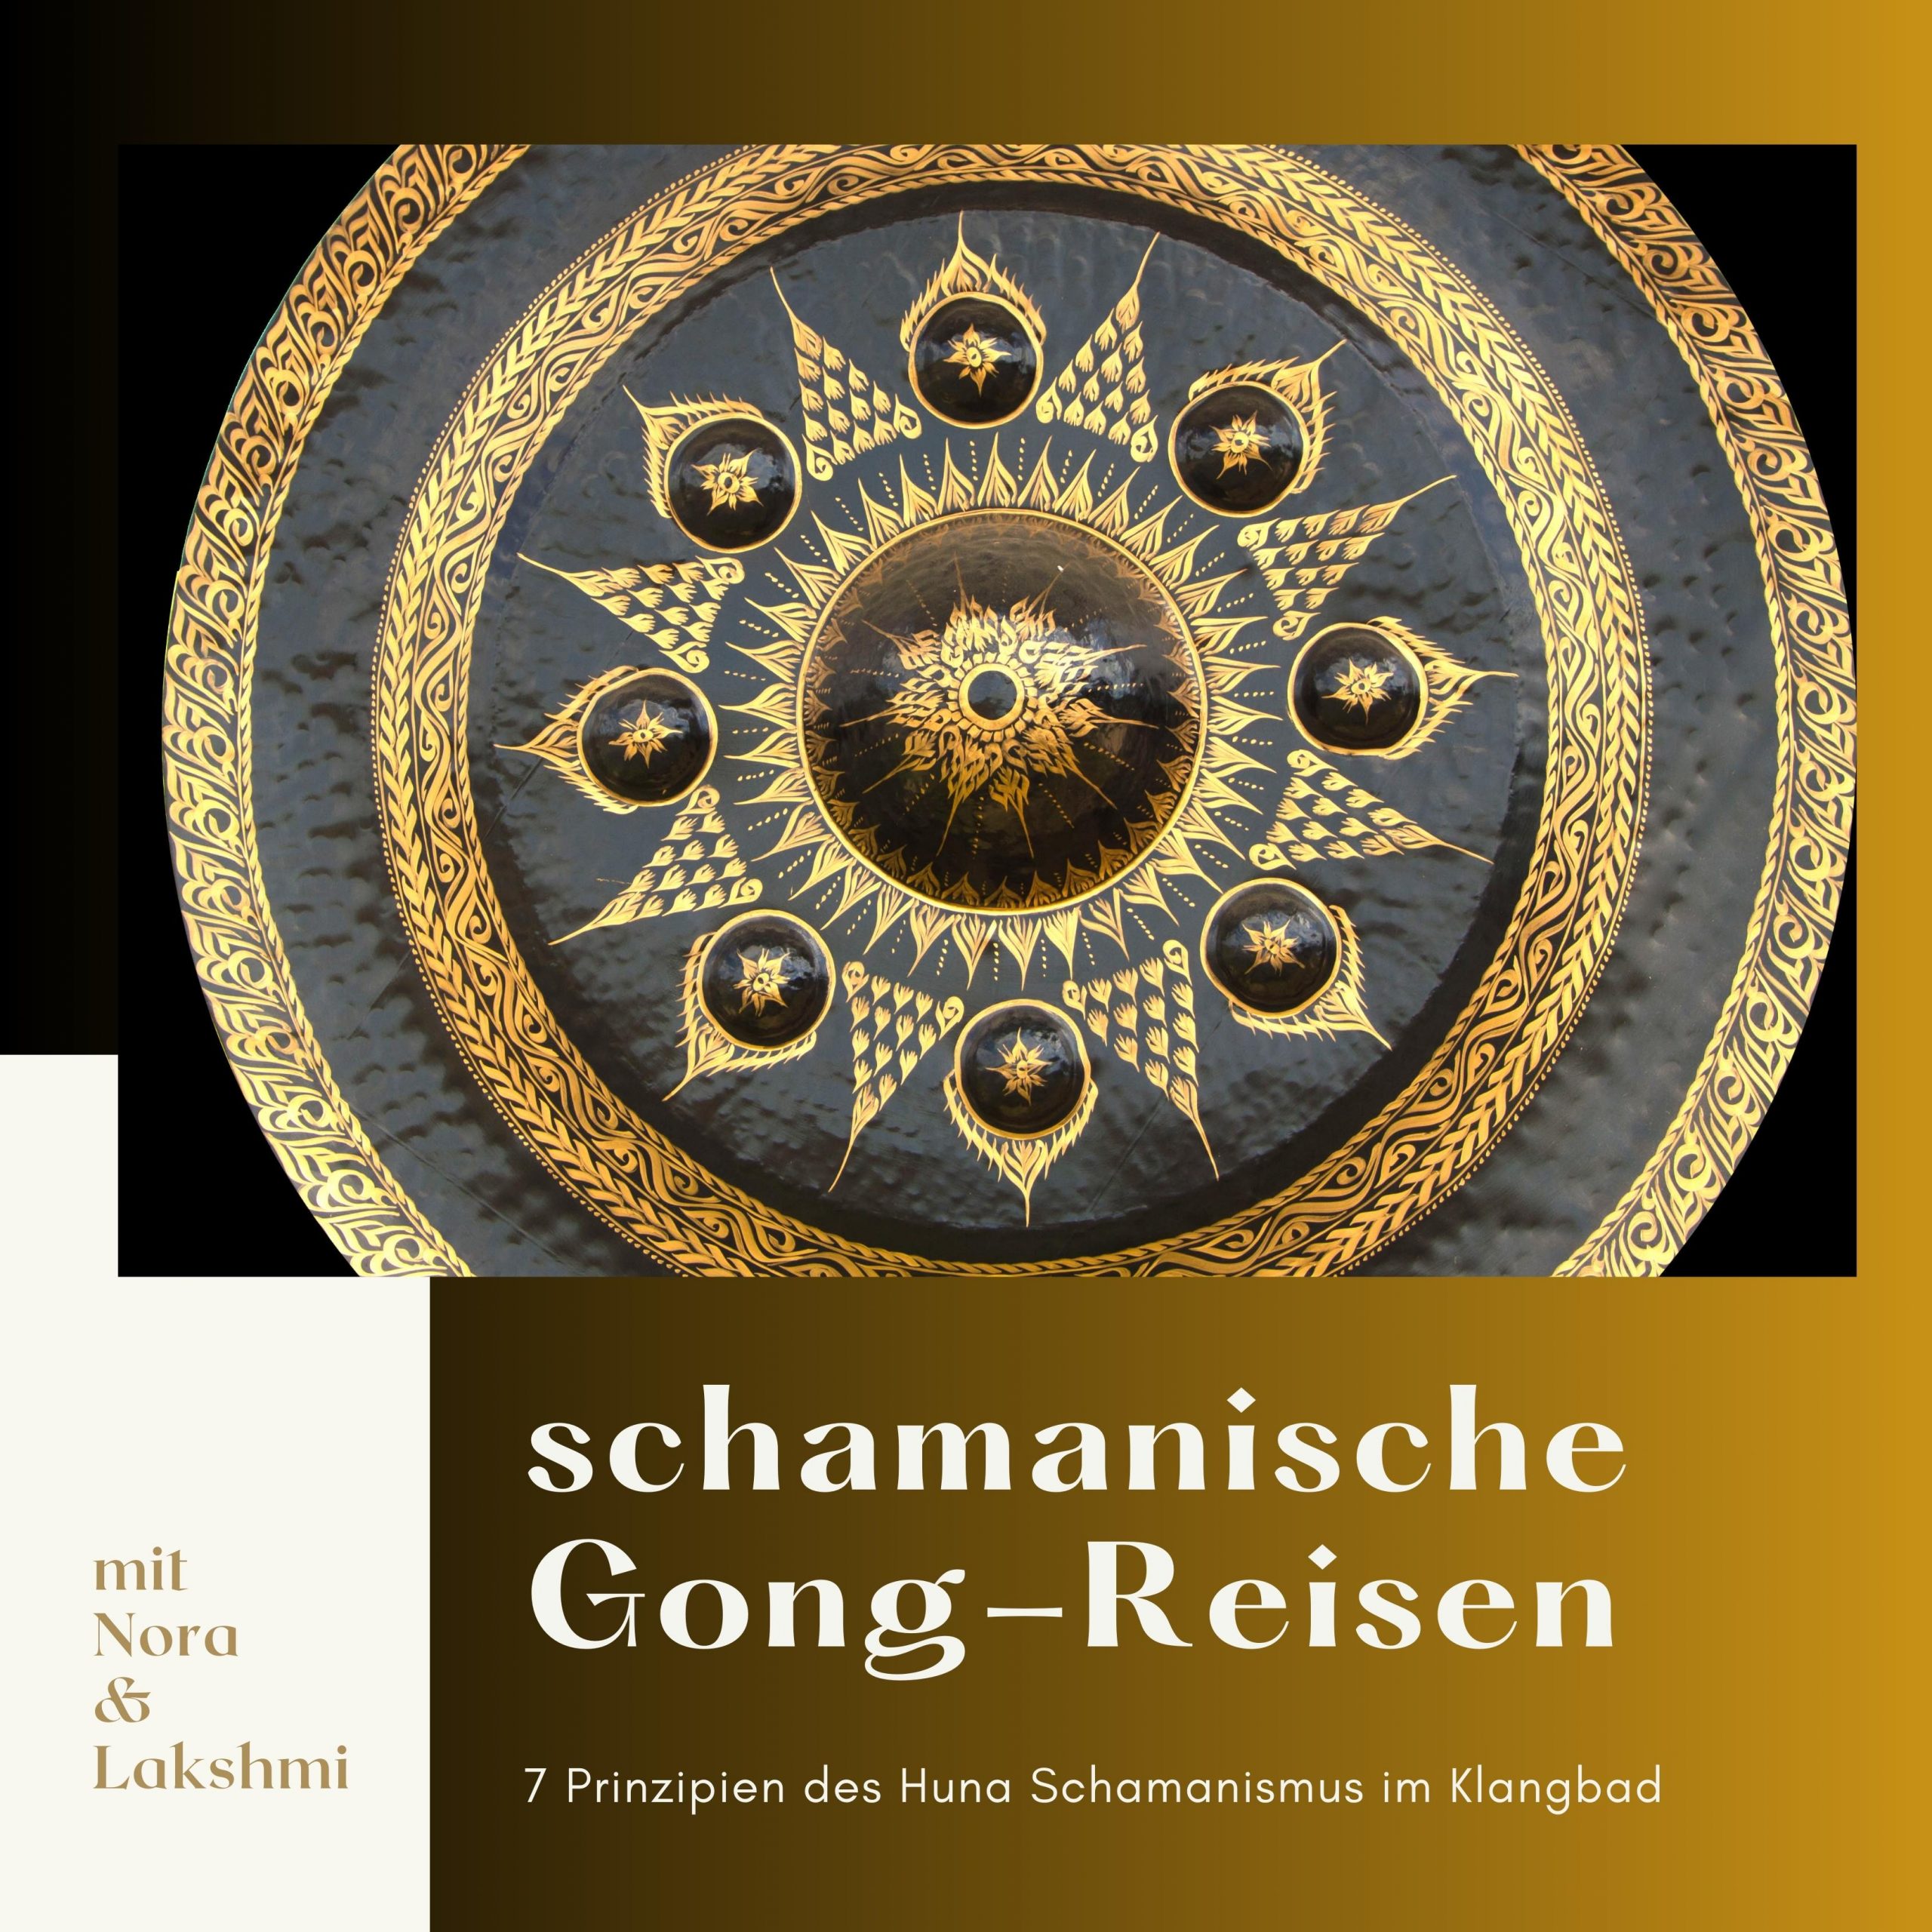 Schamanischer Gong